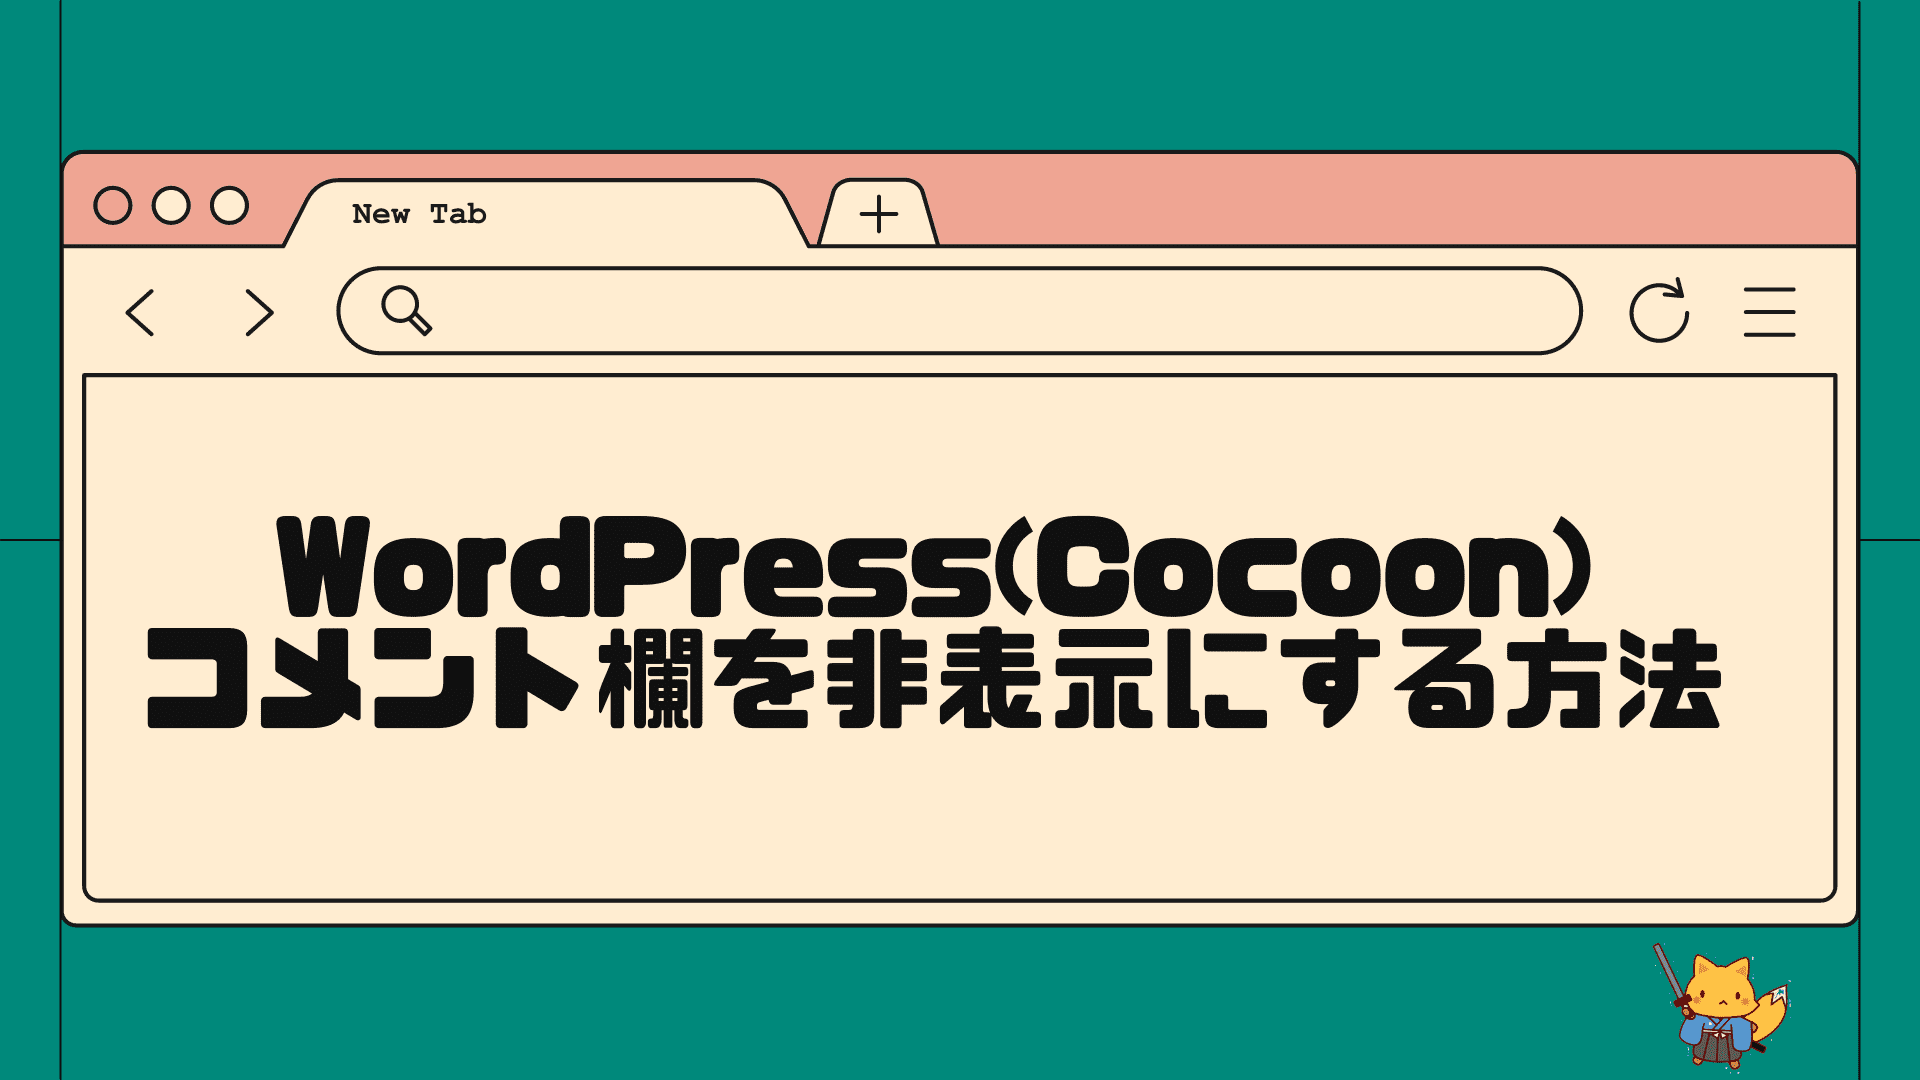 wordpress（cocoon）コメント欄を非表示にする方法